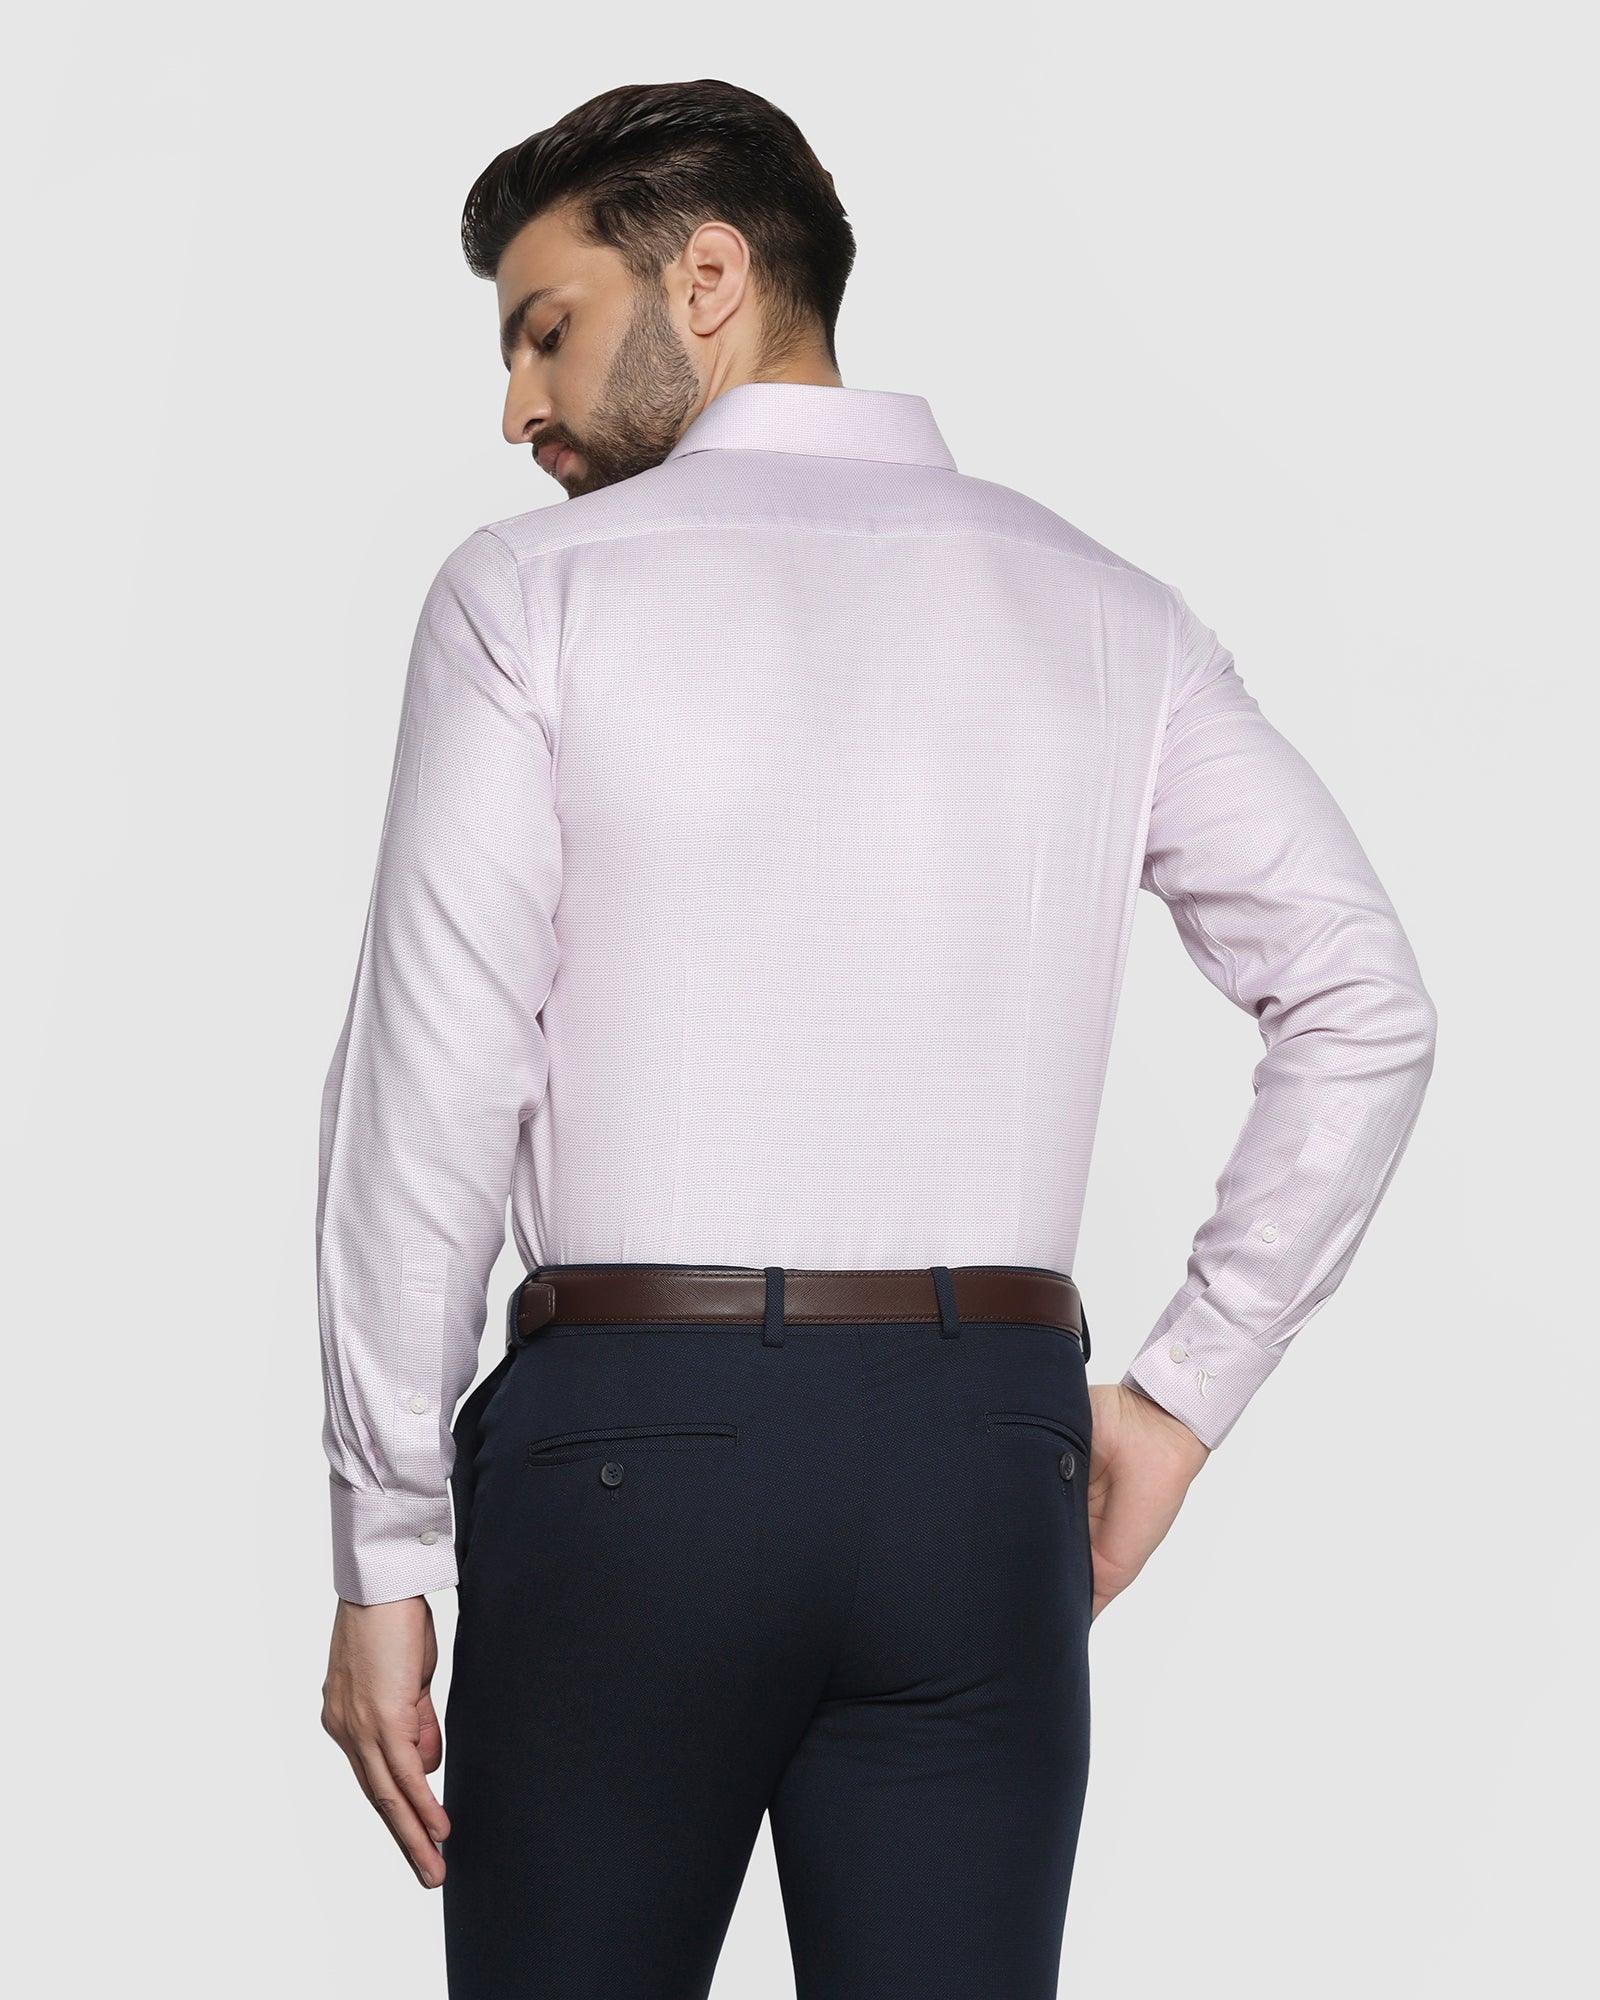 Formal Pink Textured Shirt - Seiko